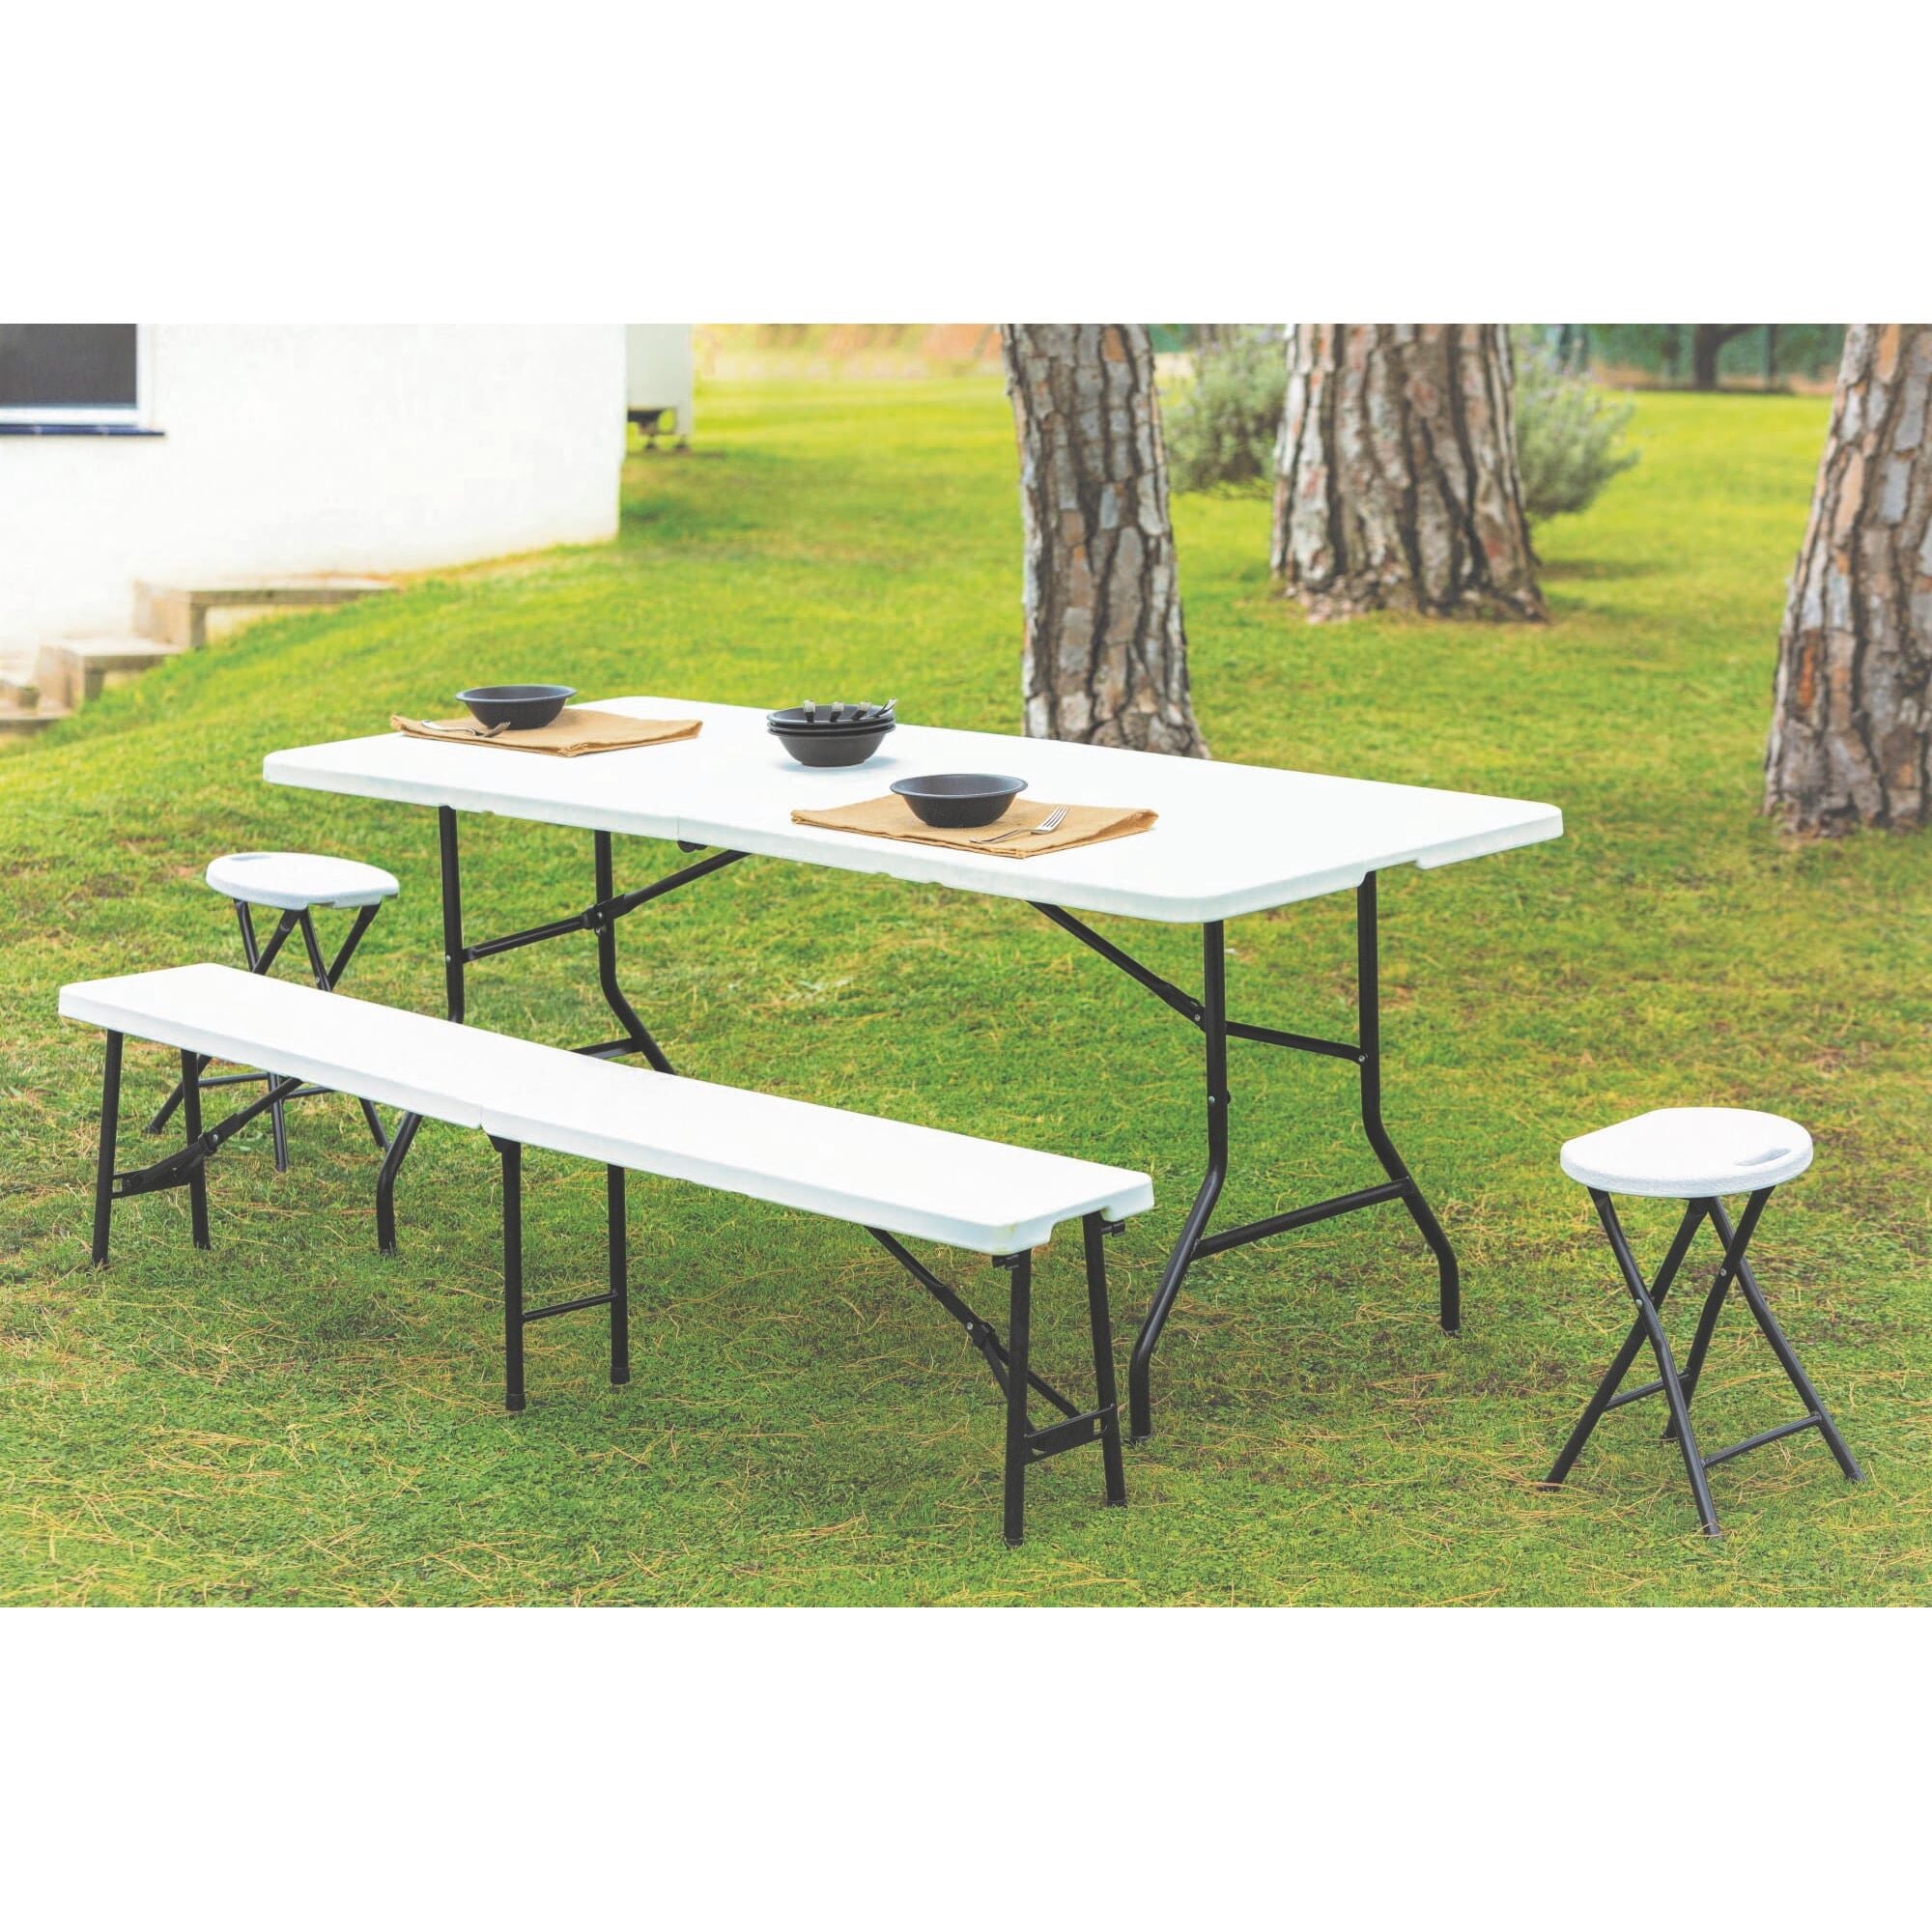 Garbar easy rectangular folding table indoor,